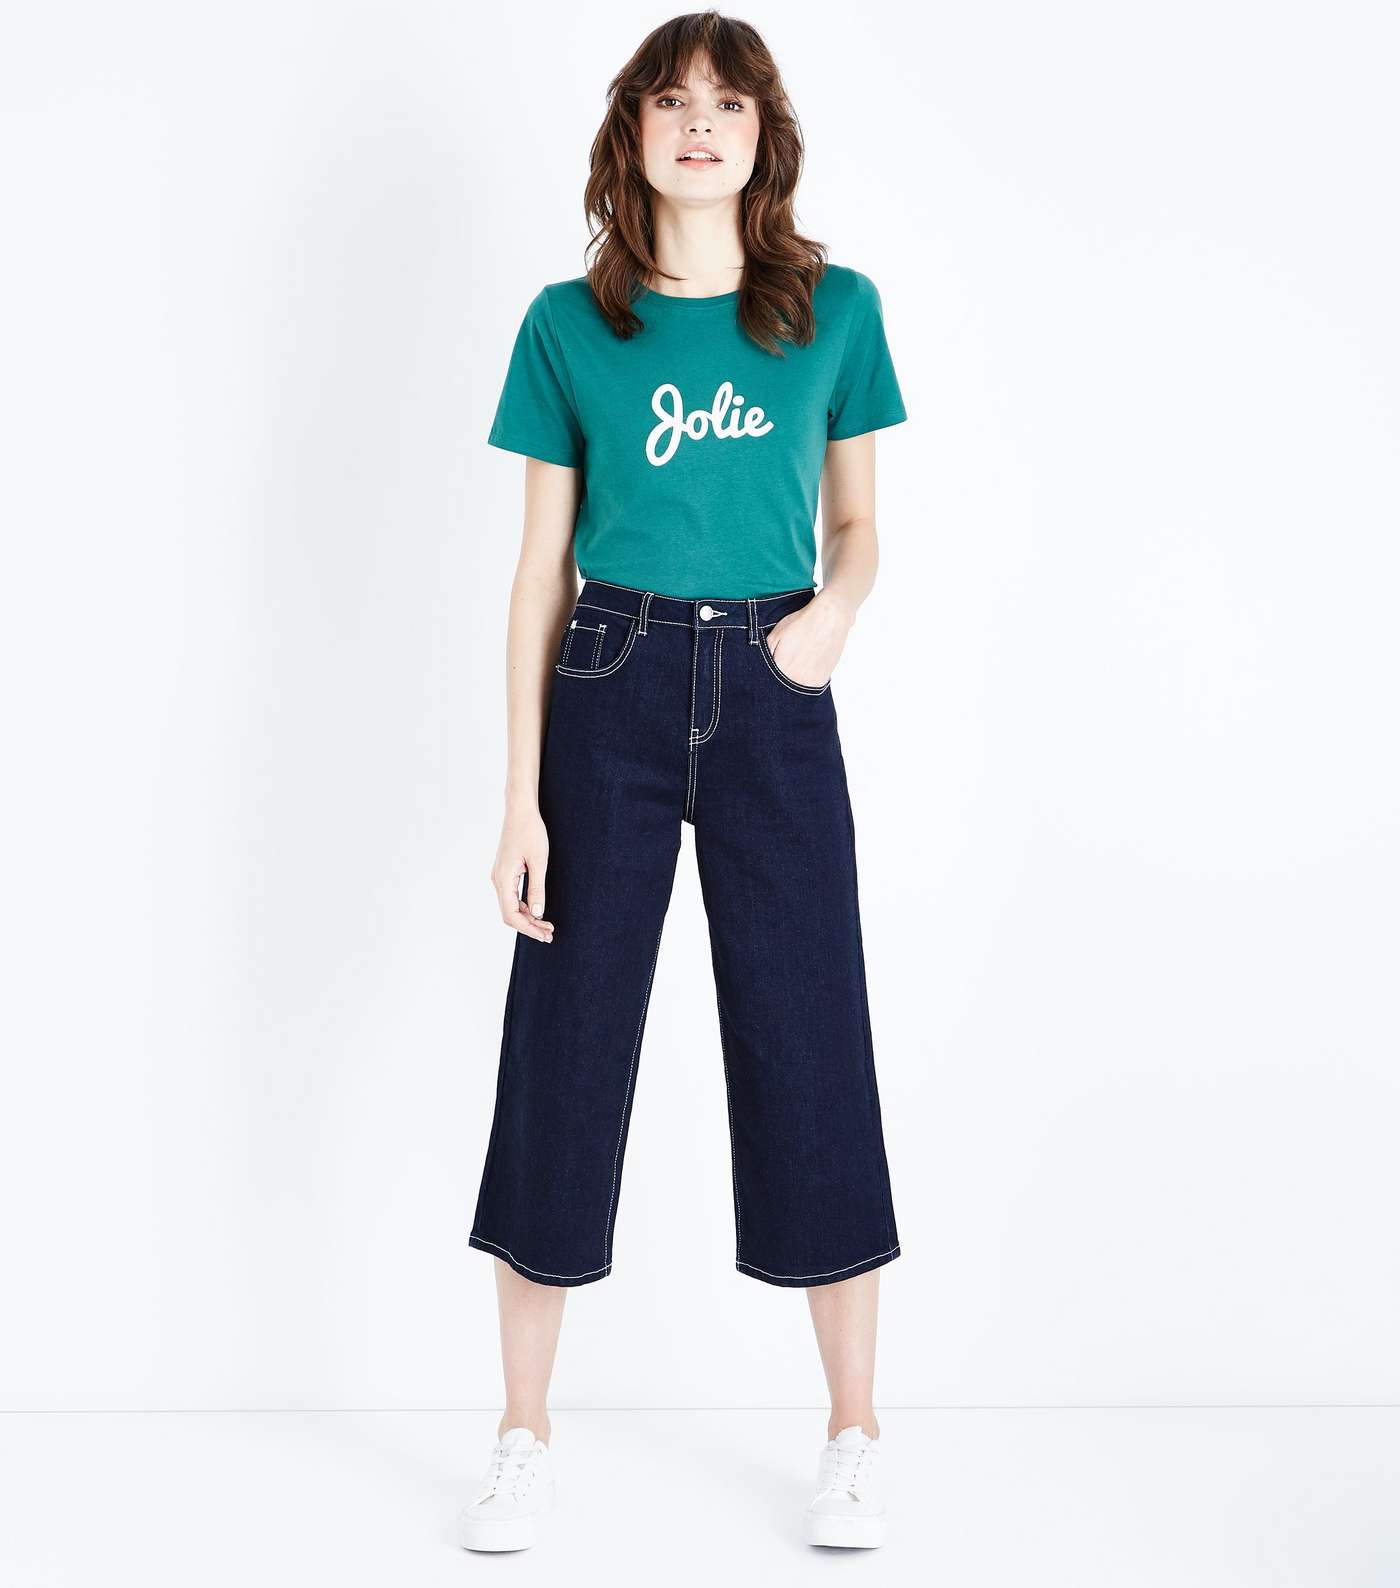 Green Jolie Print T-Shirt Image 2